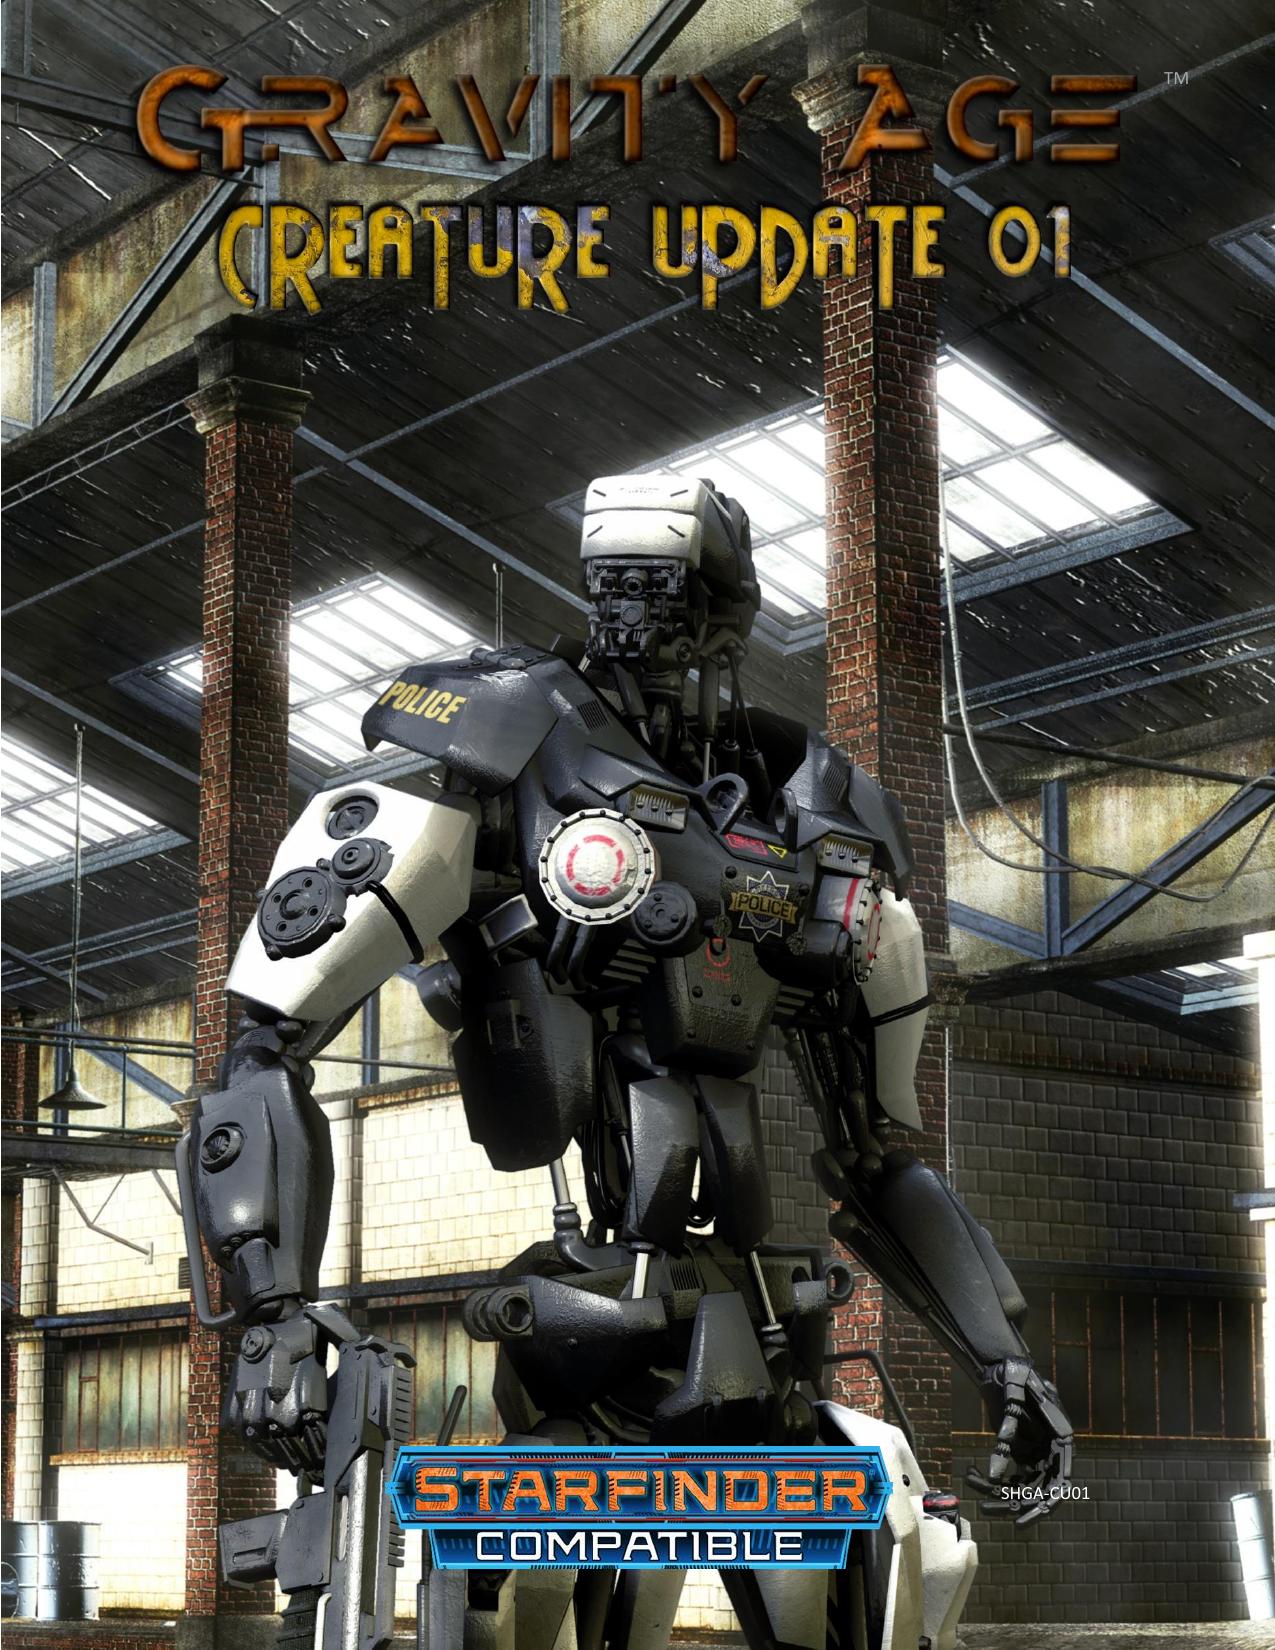 Creature Update 01